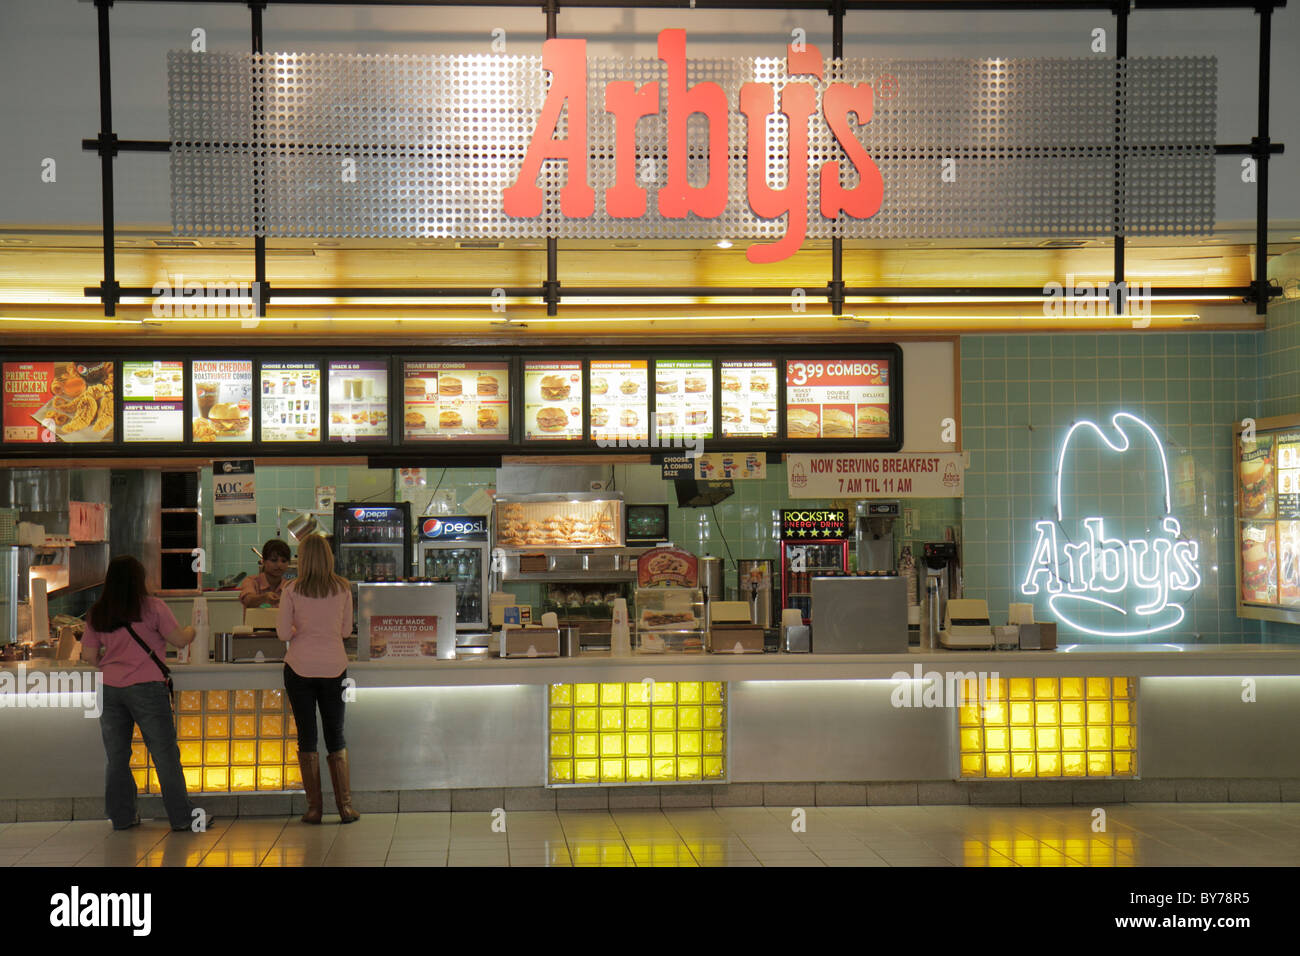 Atlanta Georgia,CNN Center,atrium fast food court plaza,Arby's,roast beef,counter,neon sign,woman customer,cashier,menu logo restaurant resstaurants Stock Photo